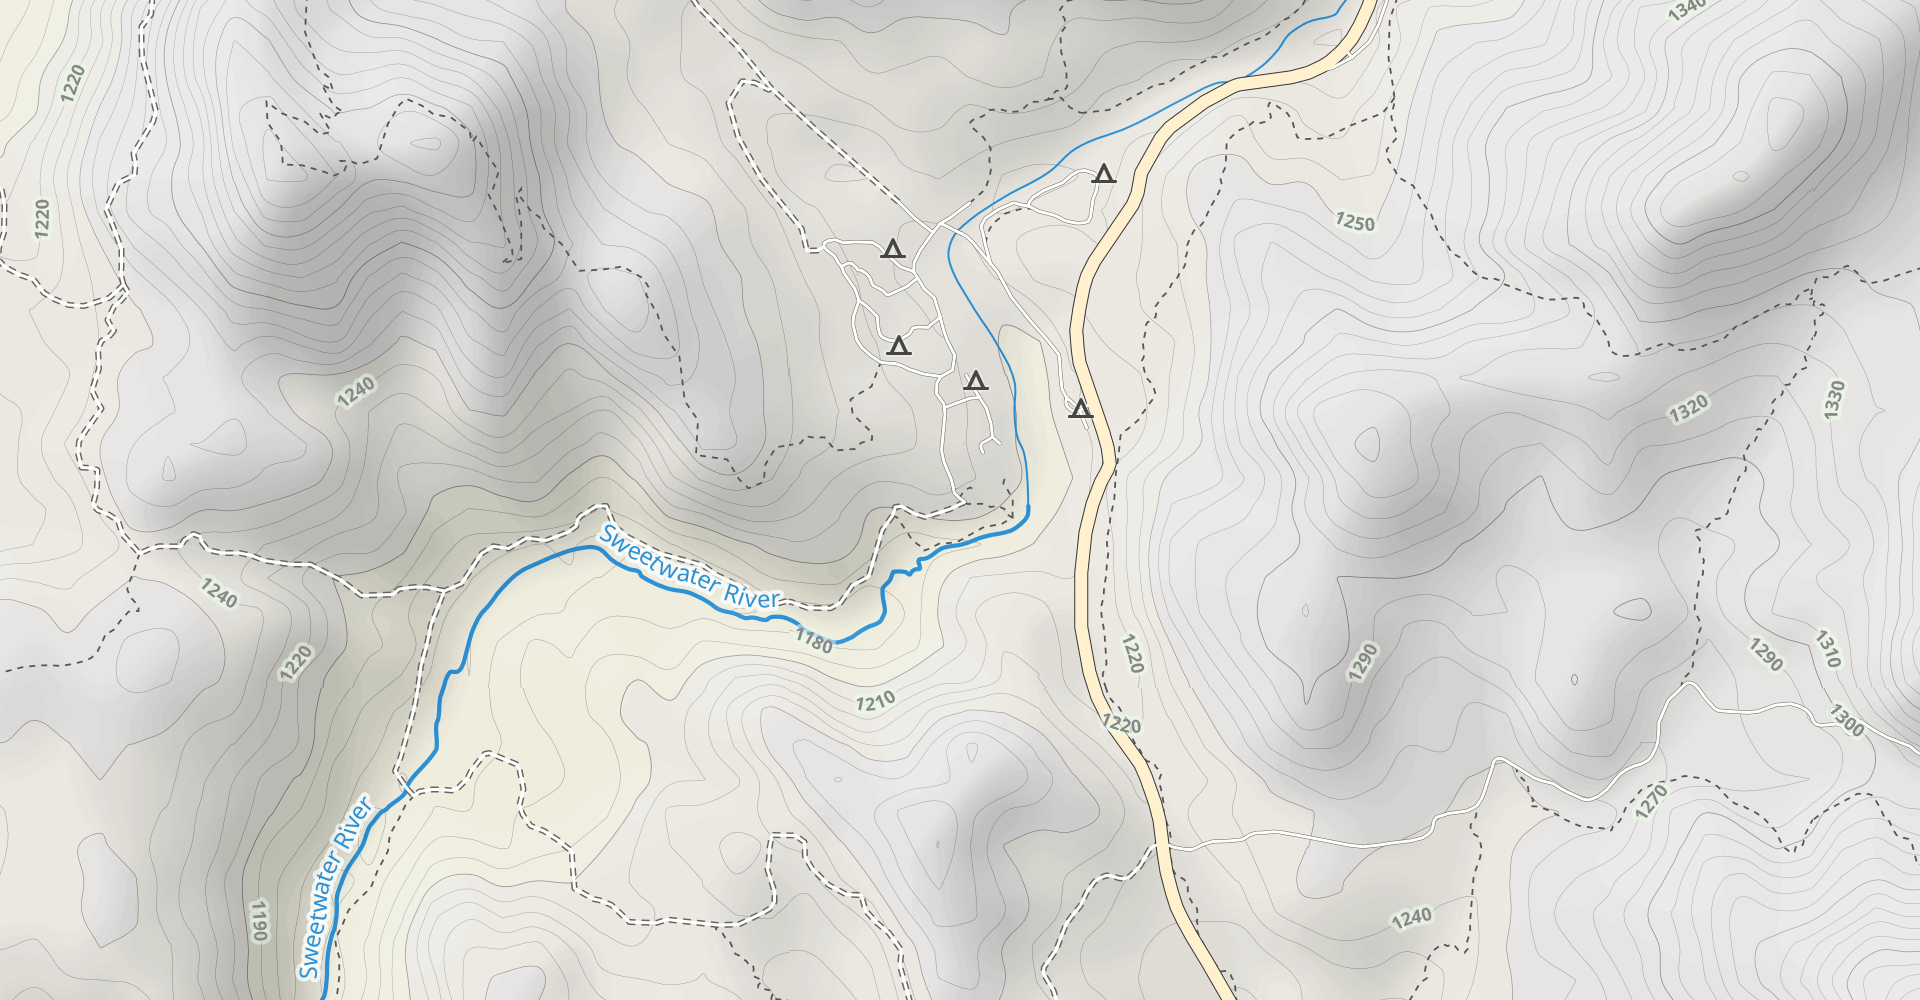 Green Valley Falls and Arroyo Secco Loop